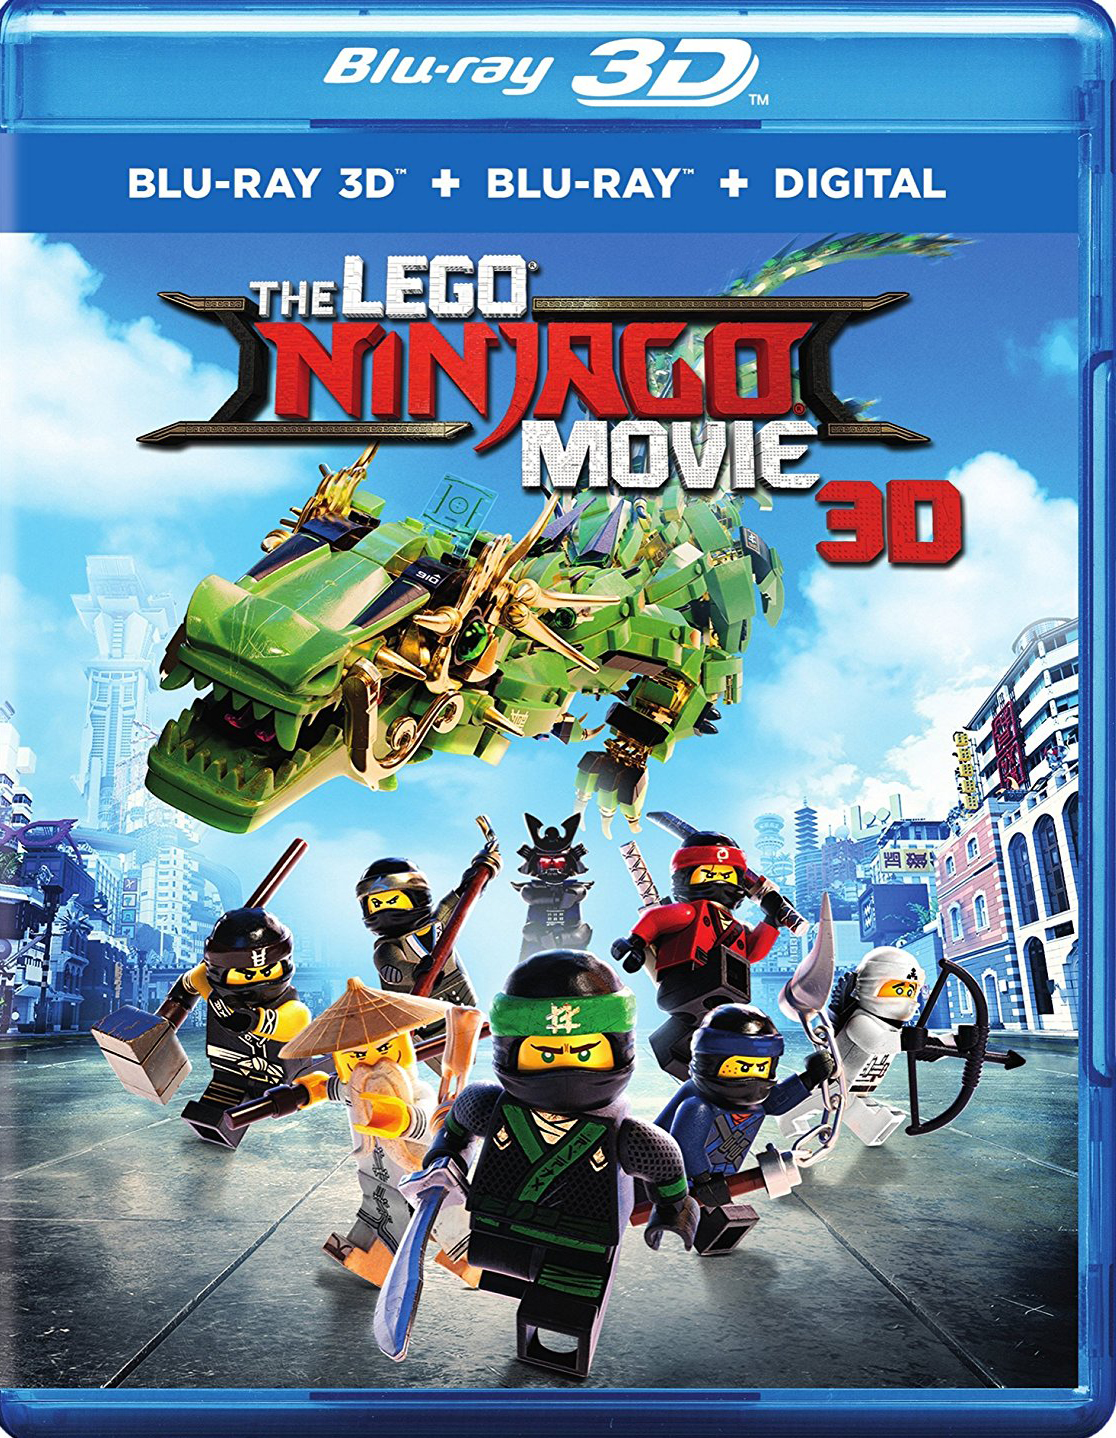 Suri opretholde fiber The LEGO NINJAGO Movie [3D] [Blu-ray] [Blu-ray/Blu-ray 3D] [2017] - Best Buy